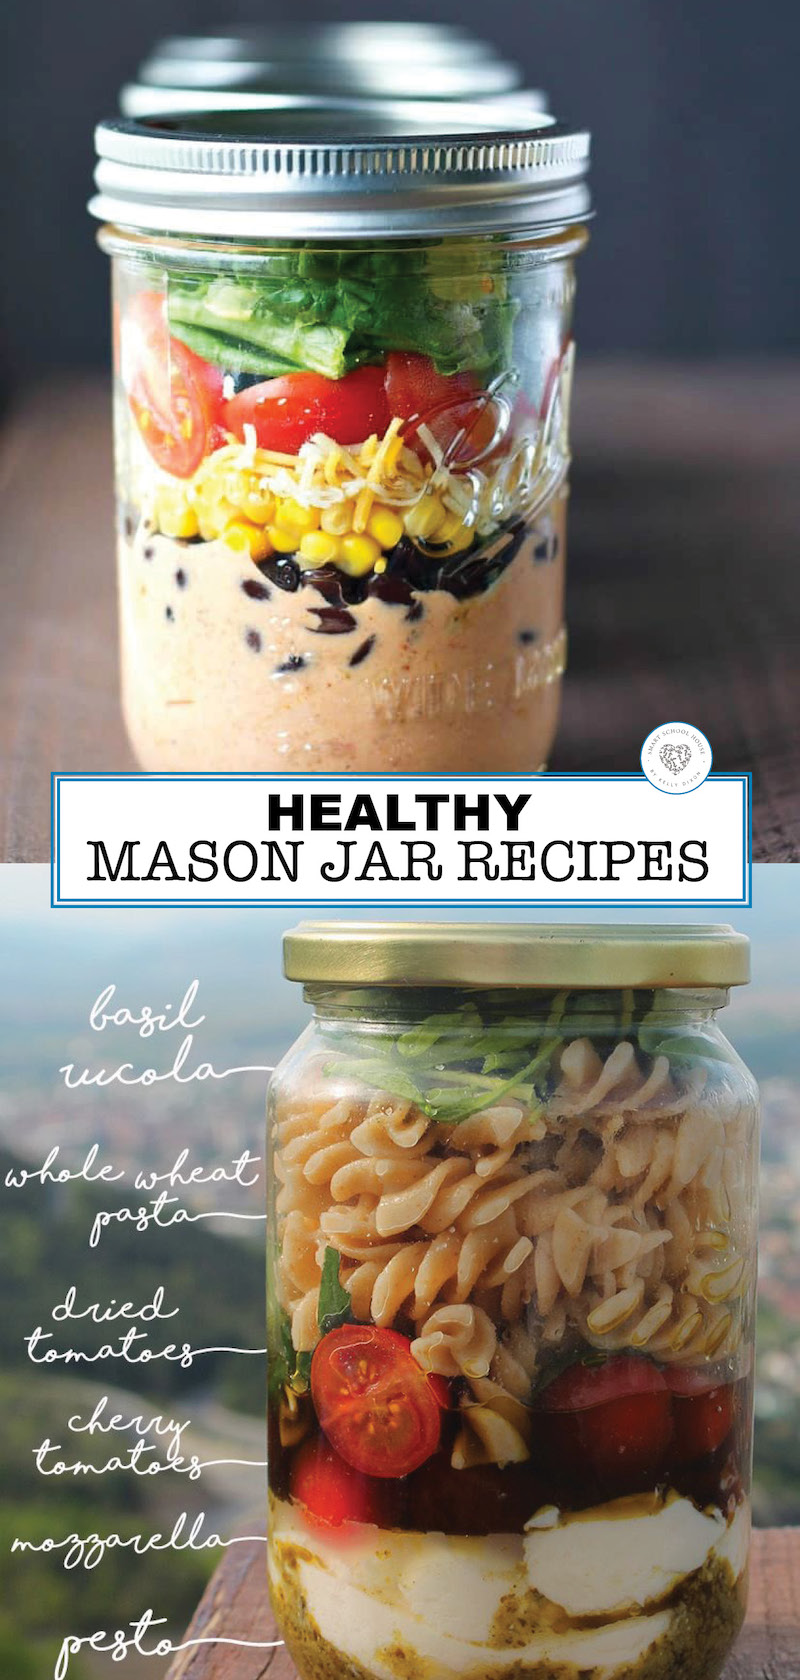 Healthy Mason Jar Recipe Ideas - mason jar banana bread recipe, mason jar zucchini bread, mason jar eggs, mason jar pies, and more!